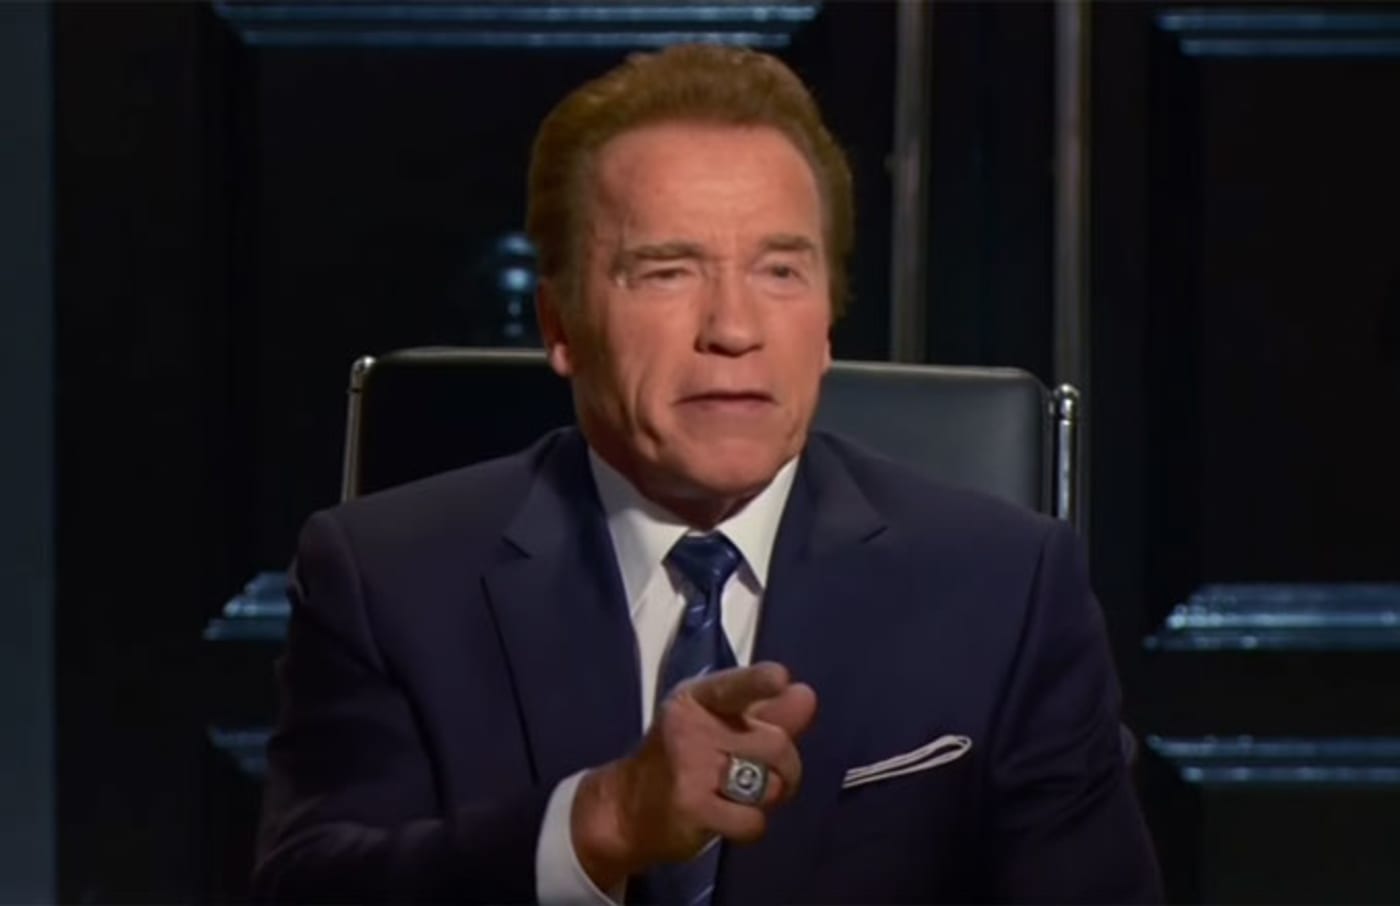 Arnold Schwarzenegger makes his debut on "The Celebrity Apprentice."